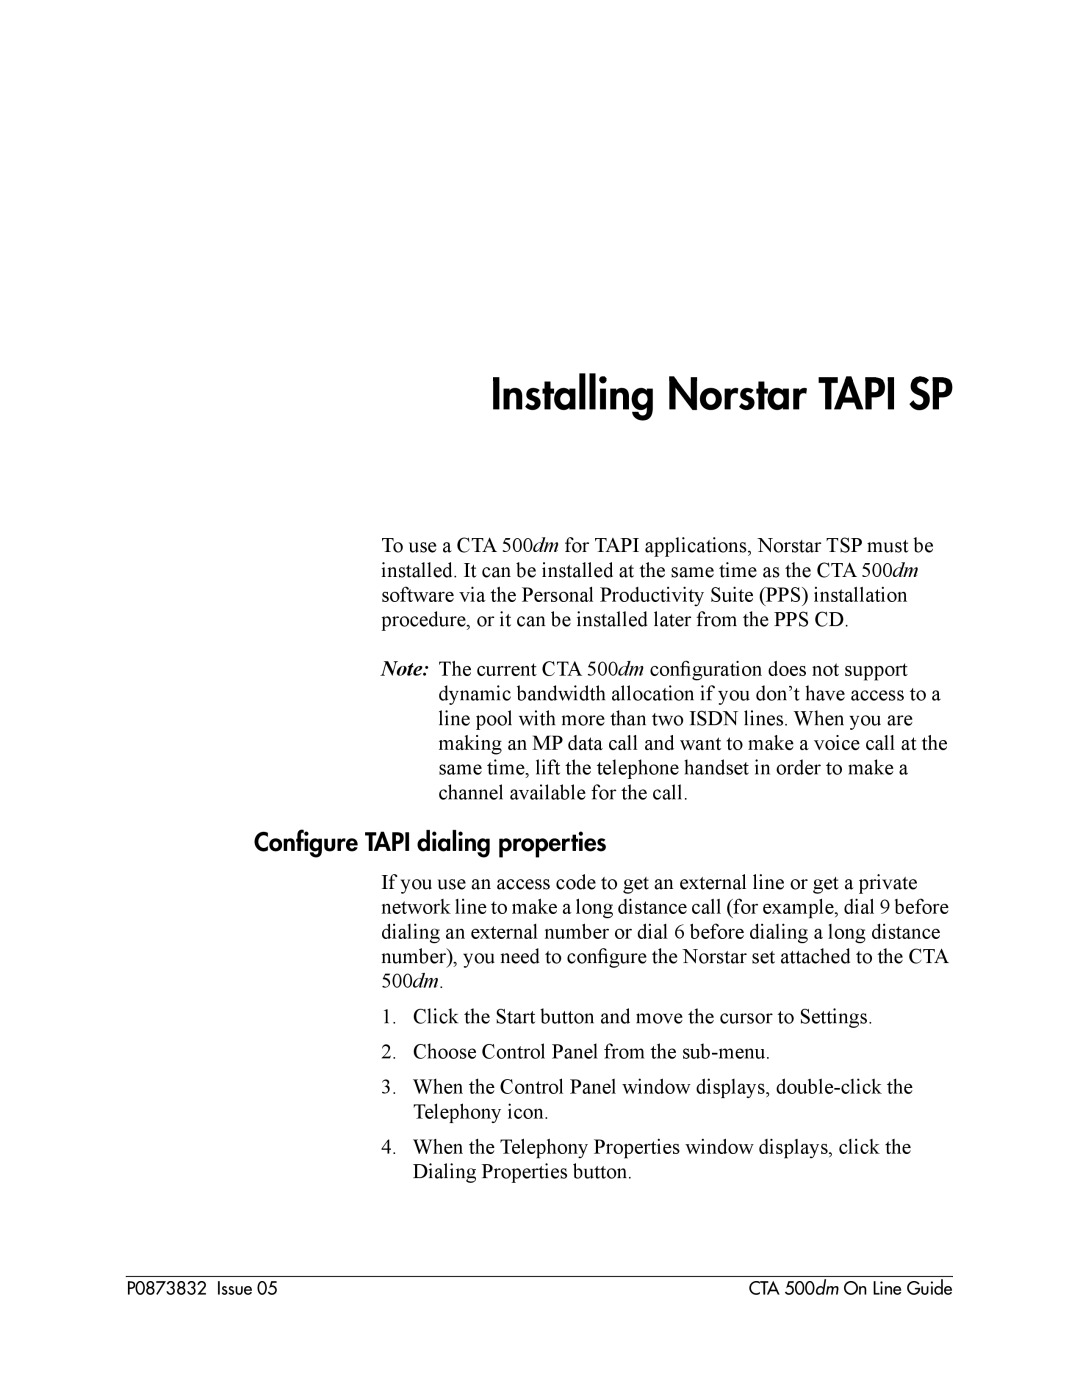 Nortel Networks CTA 500dm manual Installing Norstar TAPI SP, Conﬁgure TAPI dialing properties 